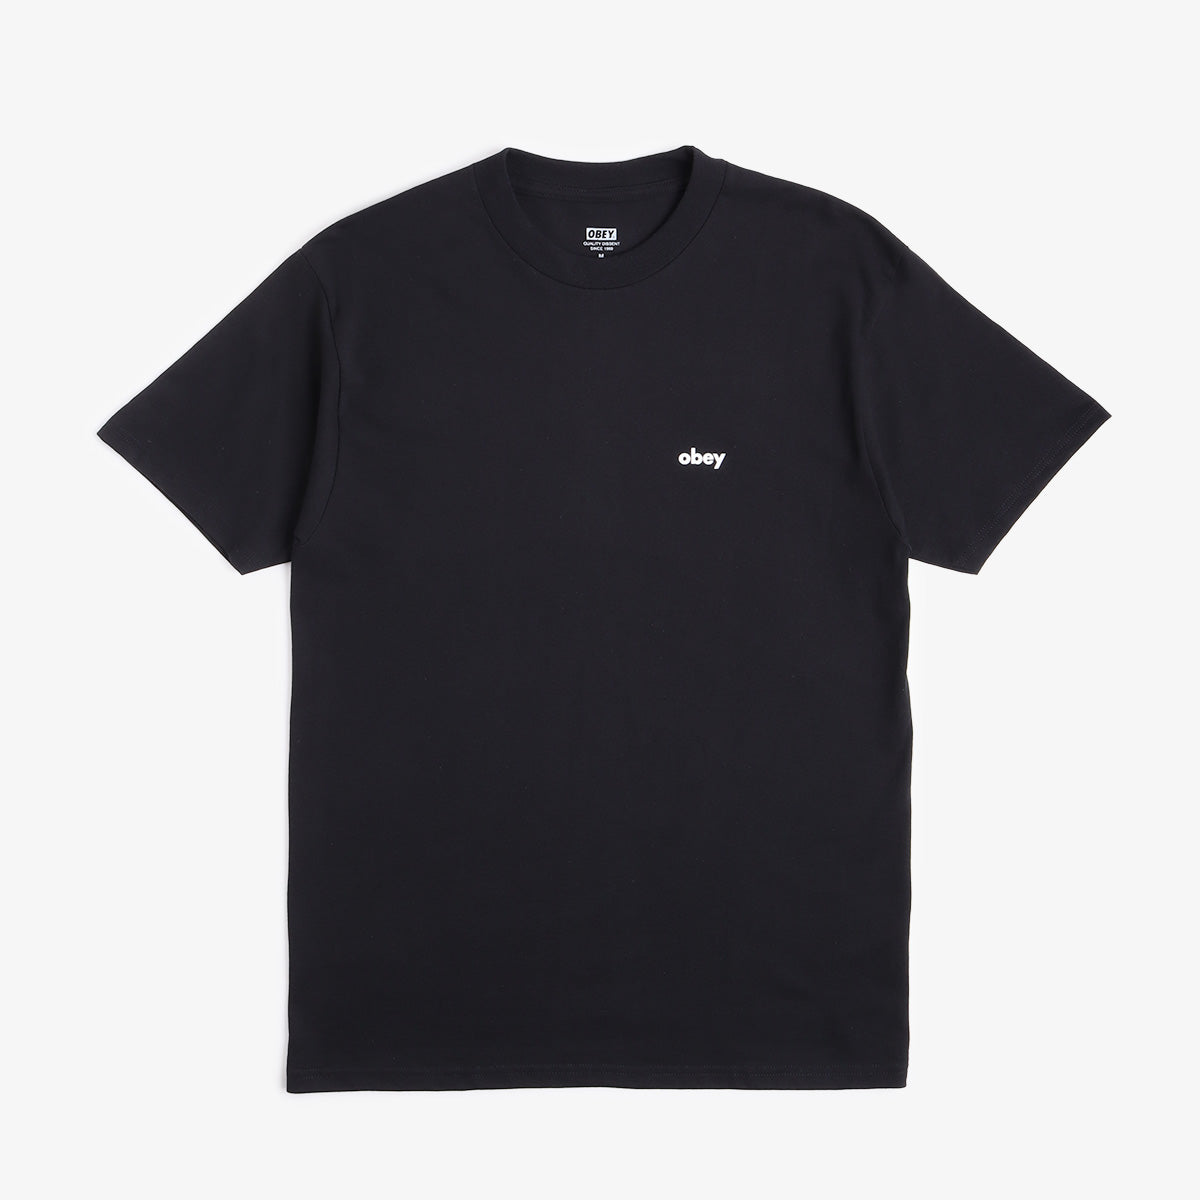 OBEY NYC Smog T-Shirt, Black, Detail Shot 2